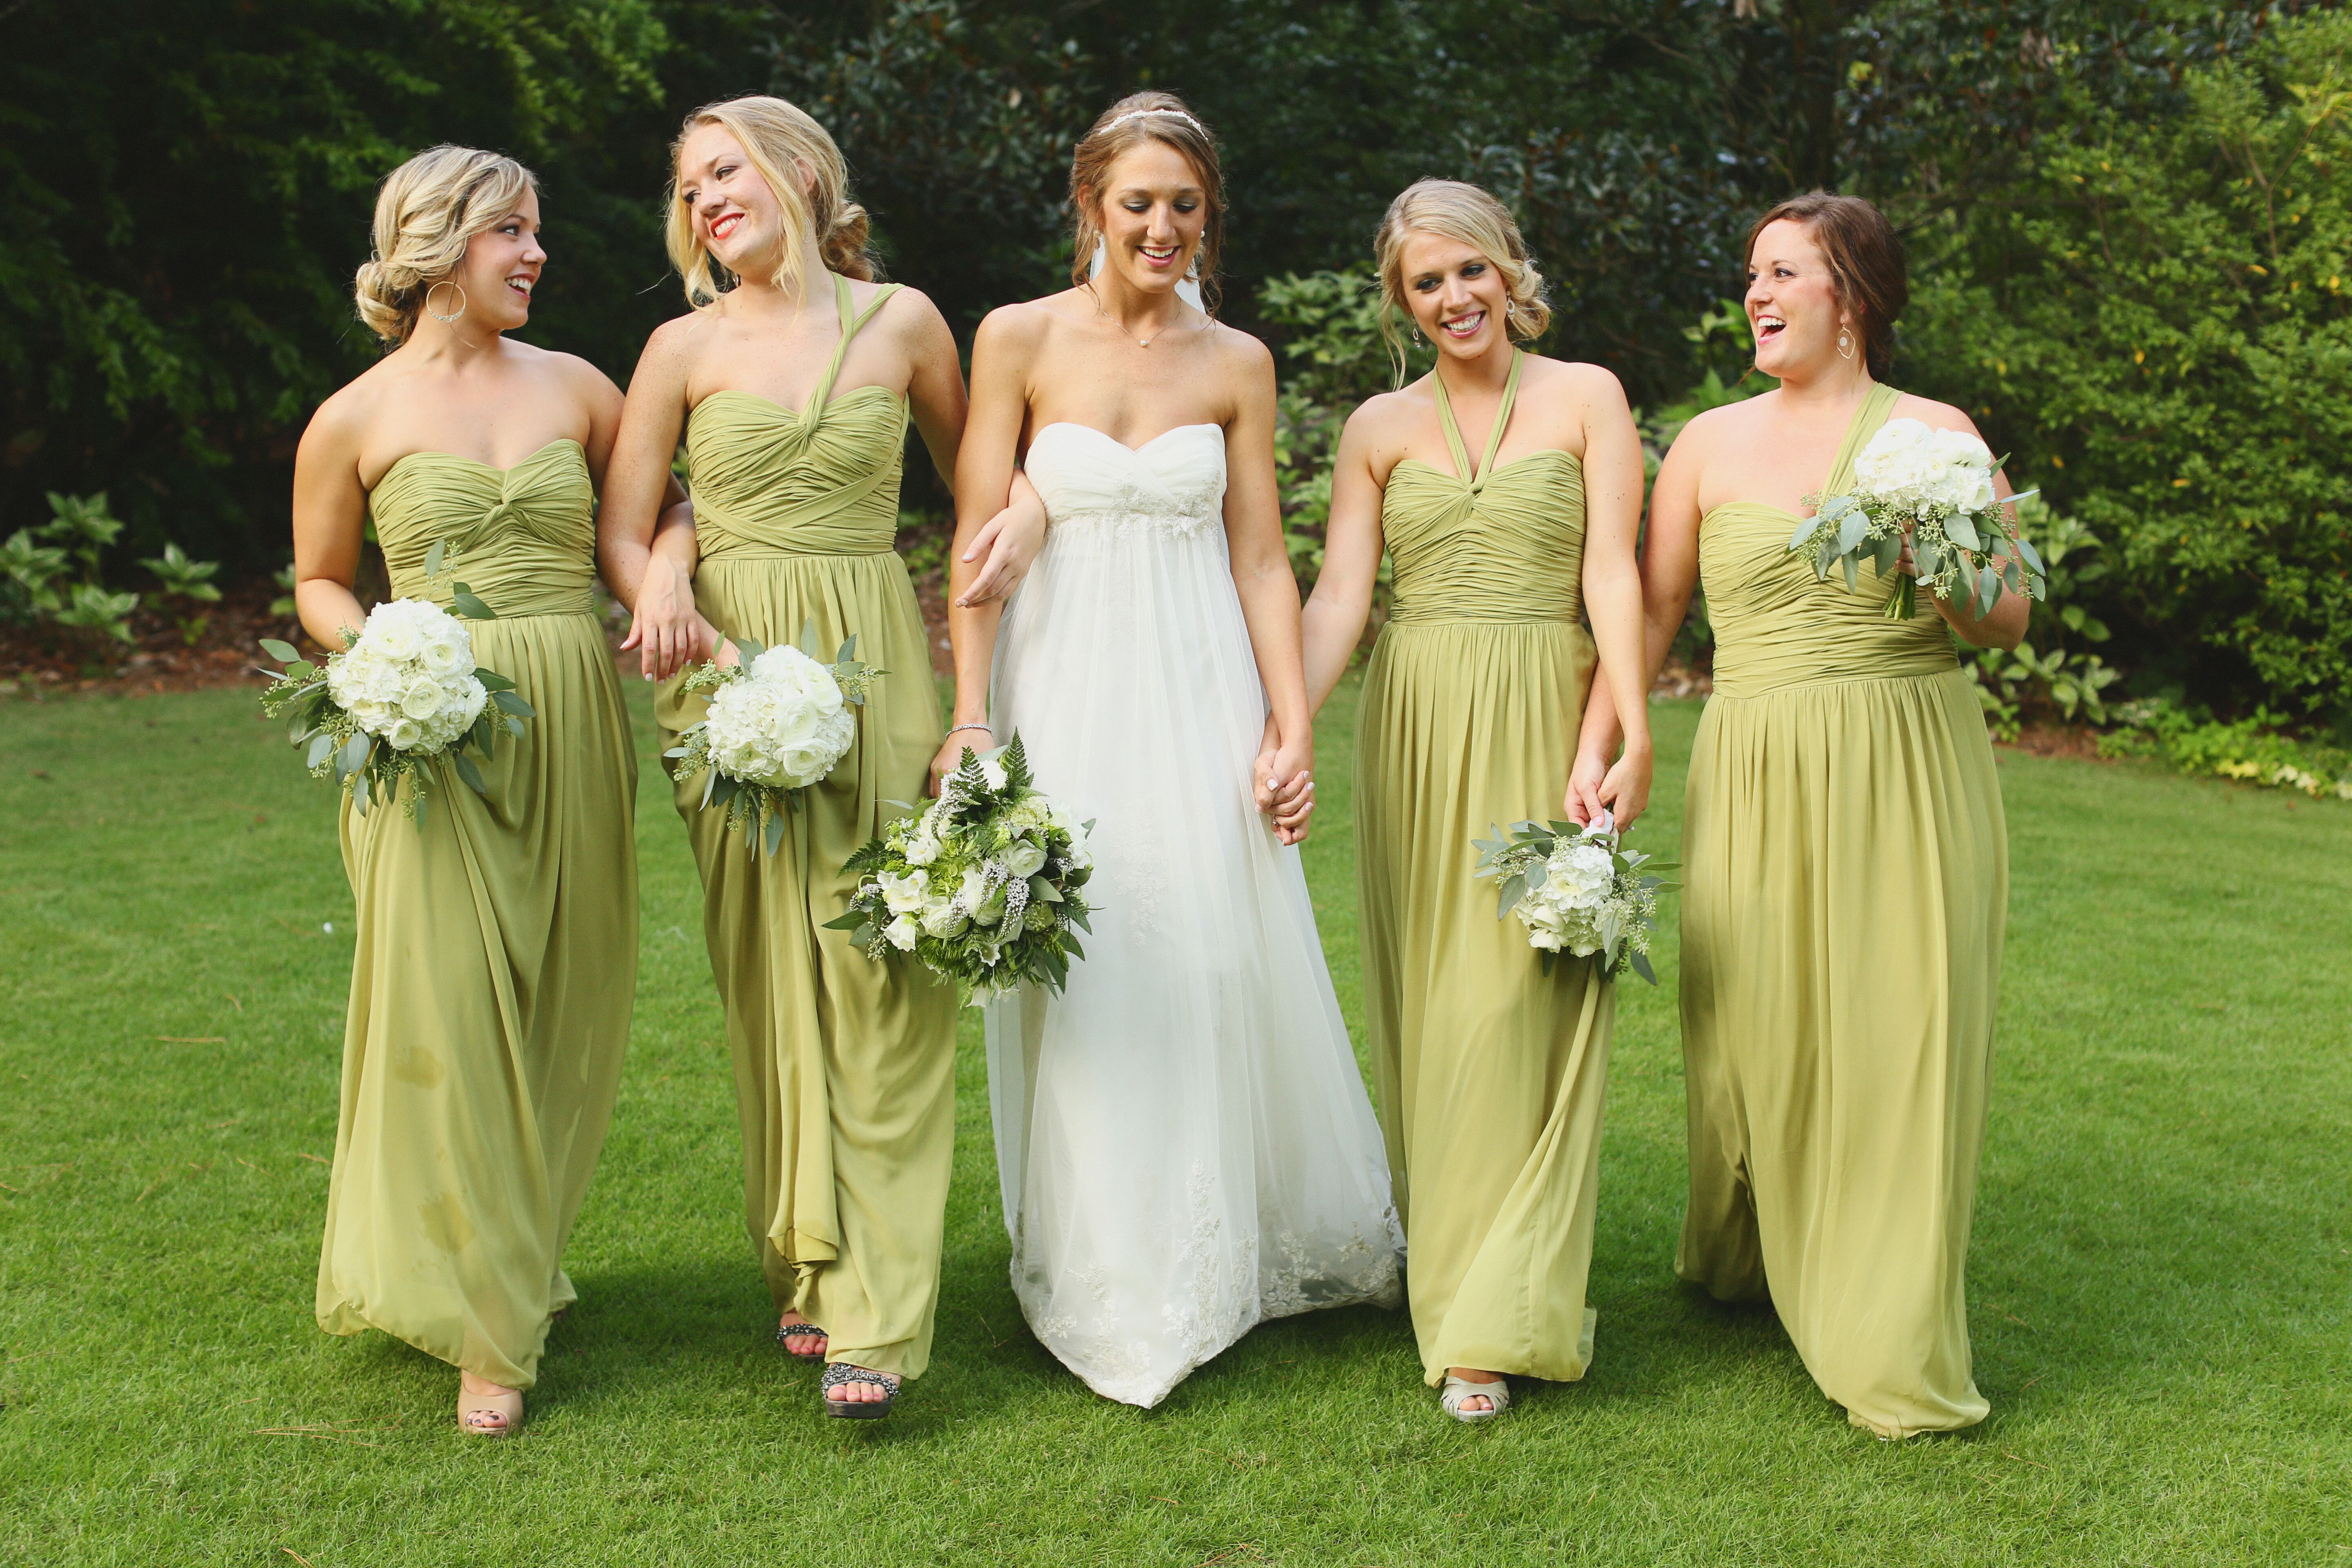 green bridesmaid dresses